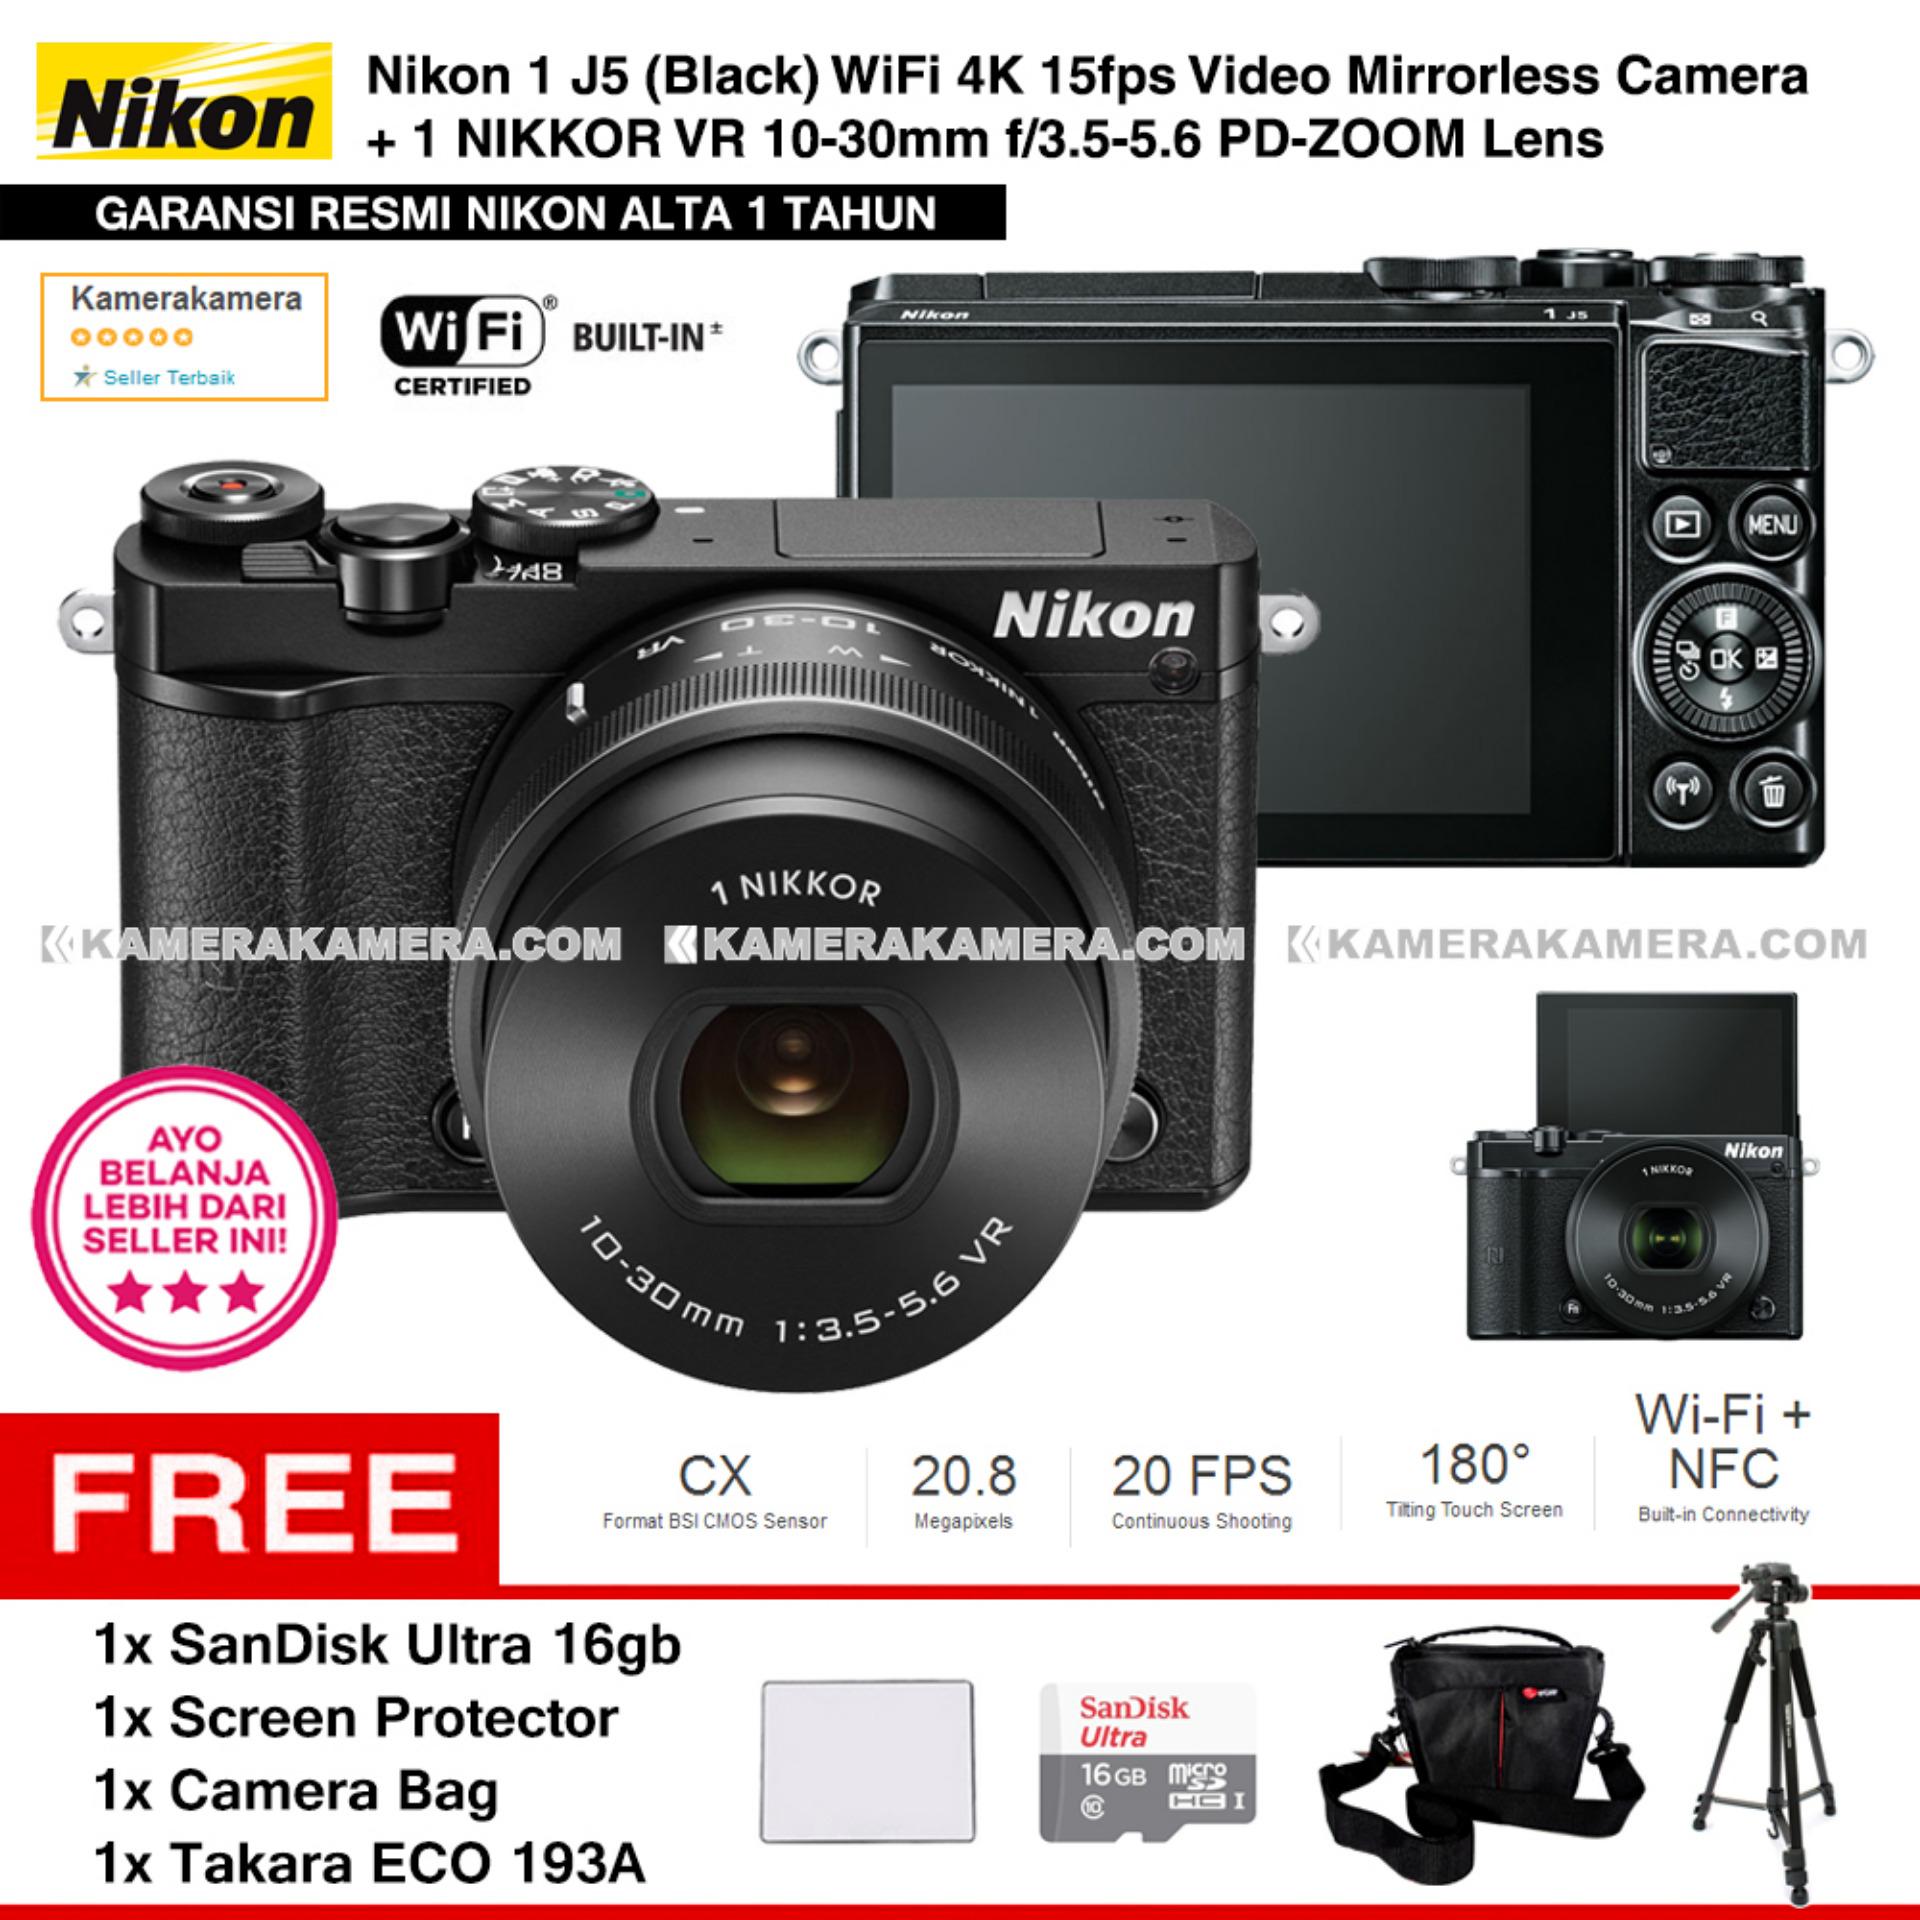 NIKON 1 J5 (BLACK) WiFi 4K Mirrorless Camera VR 10-30mm Lens - Resmi Nikon Alta + MicroSD SanDisk Ultra 16gb + Screen Protector + Camera Bag + Takara ECO-193A